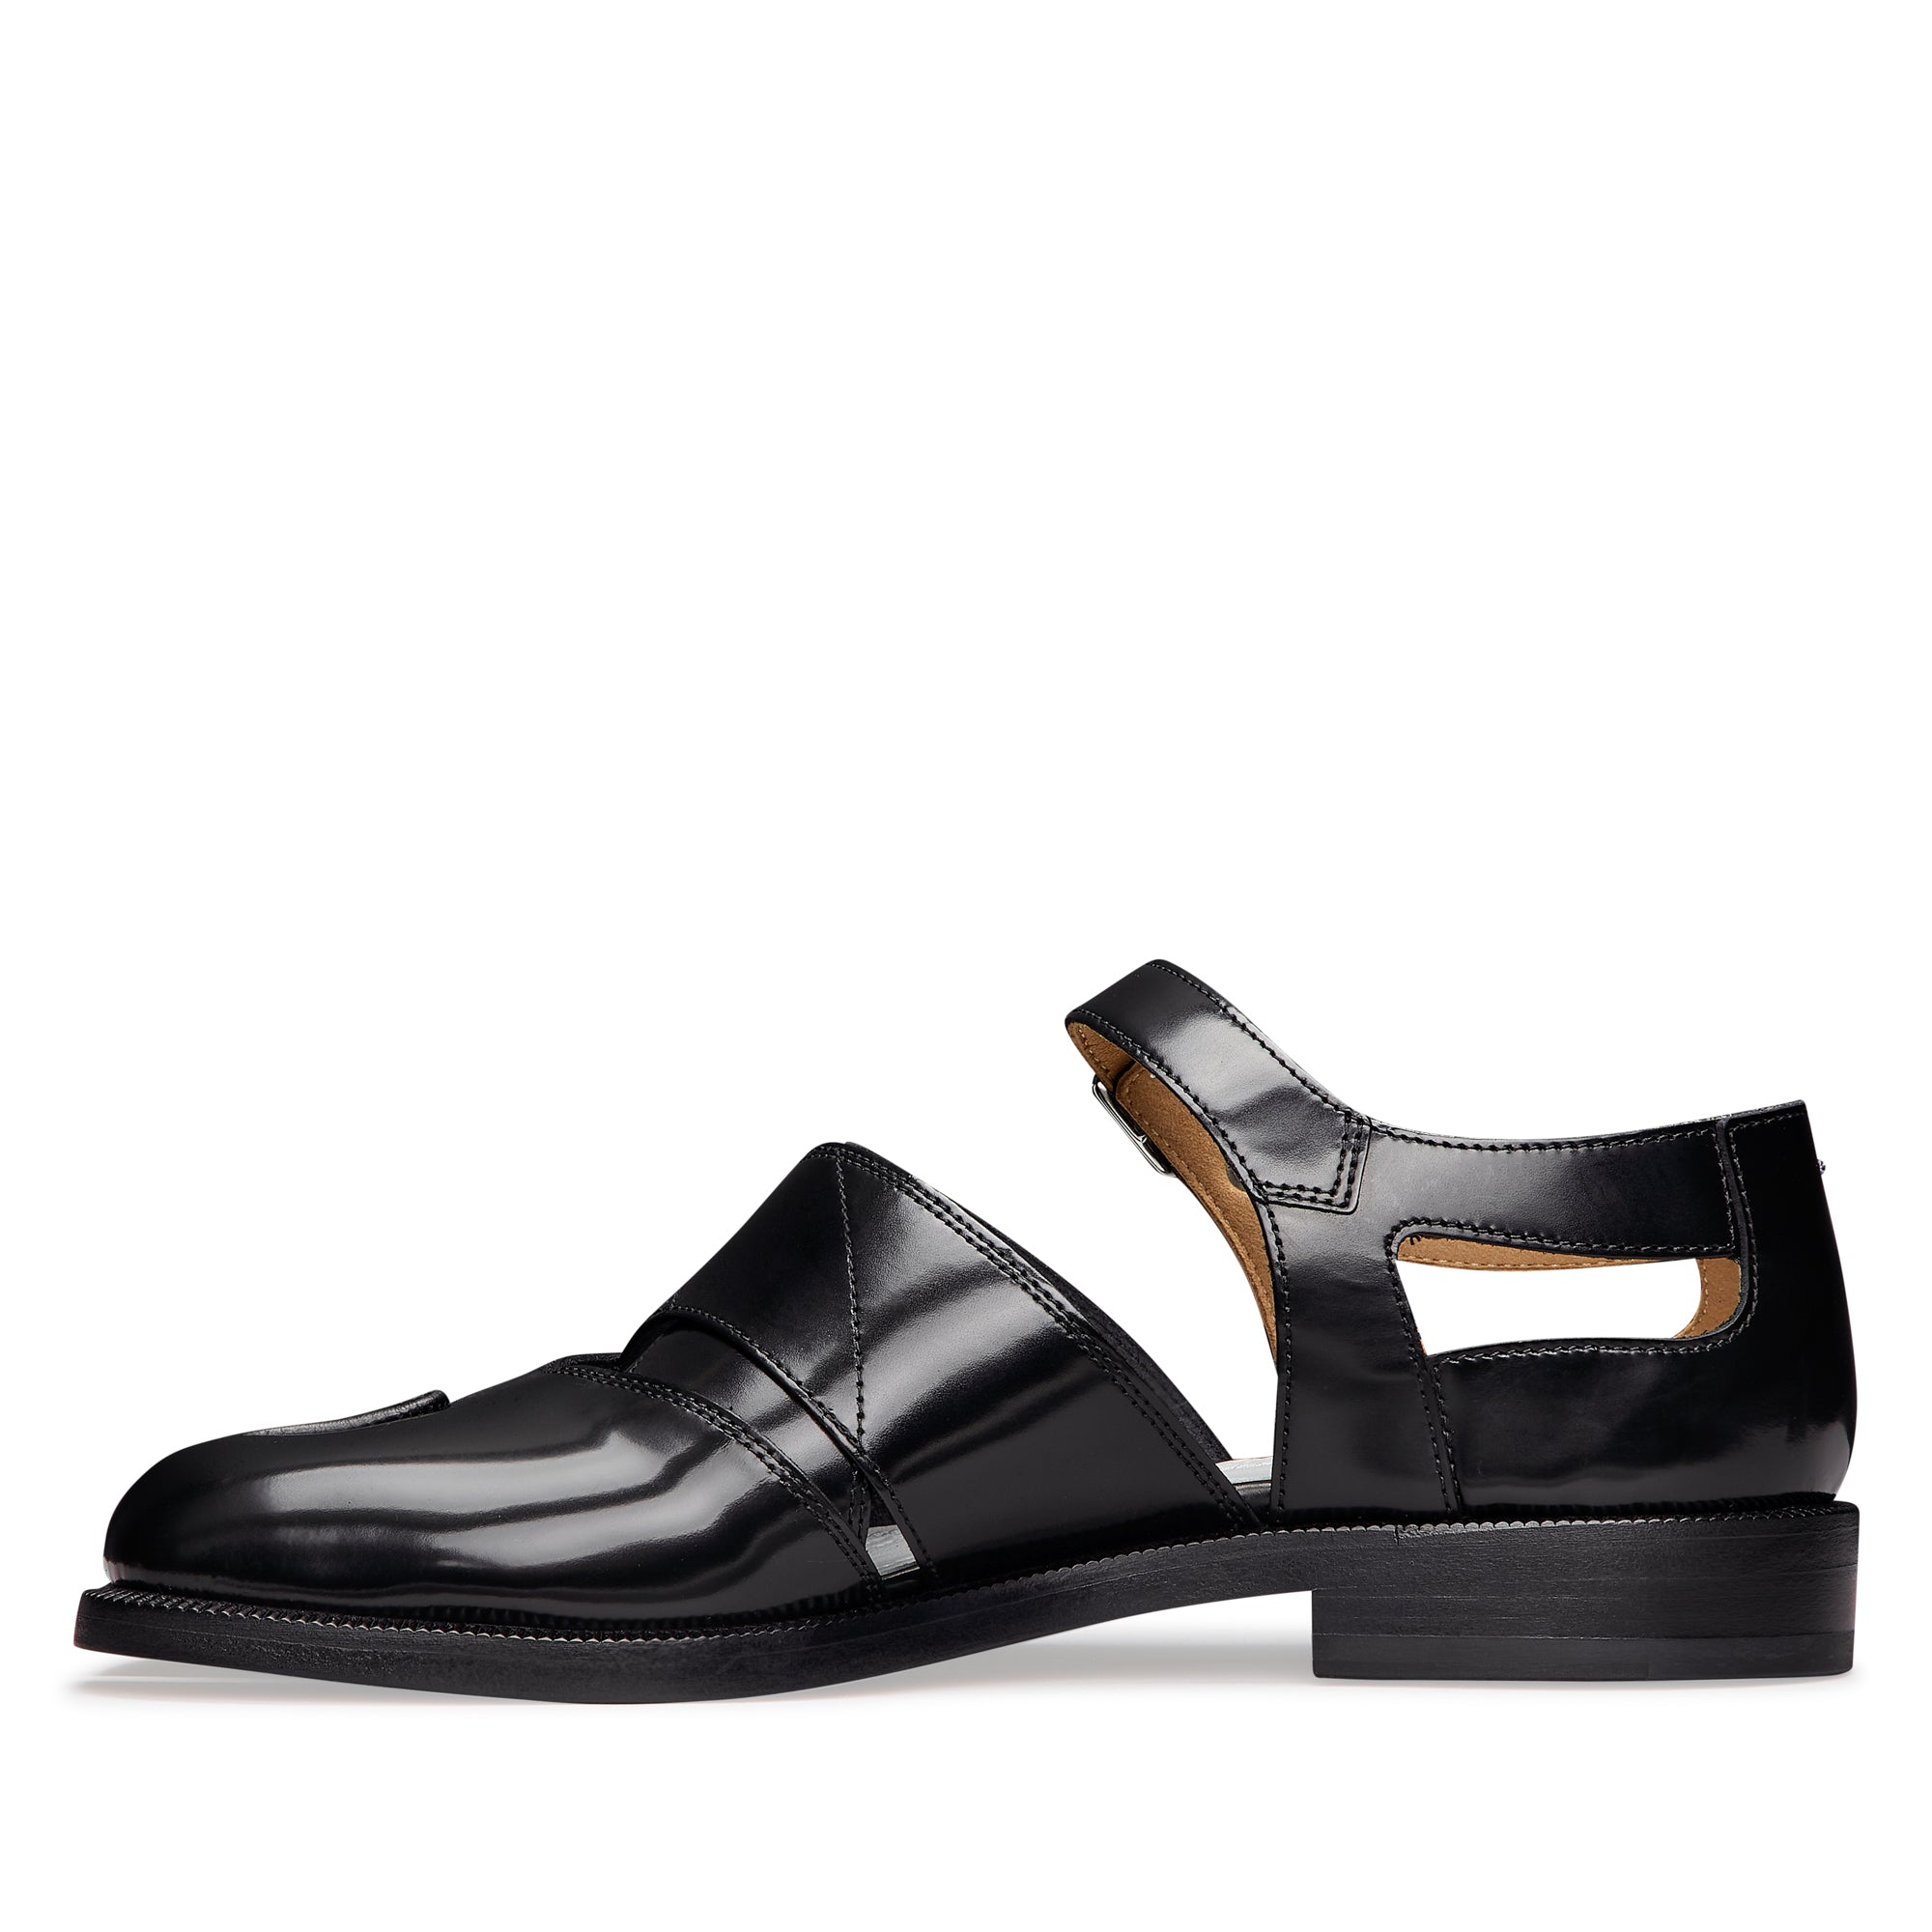 Martin Margiela - Women’s Tabi Leather Sandals - (Black) view 4